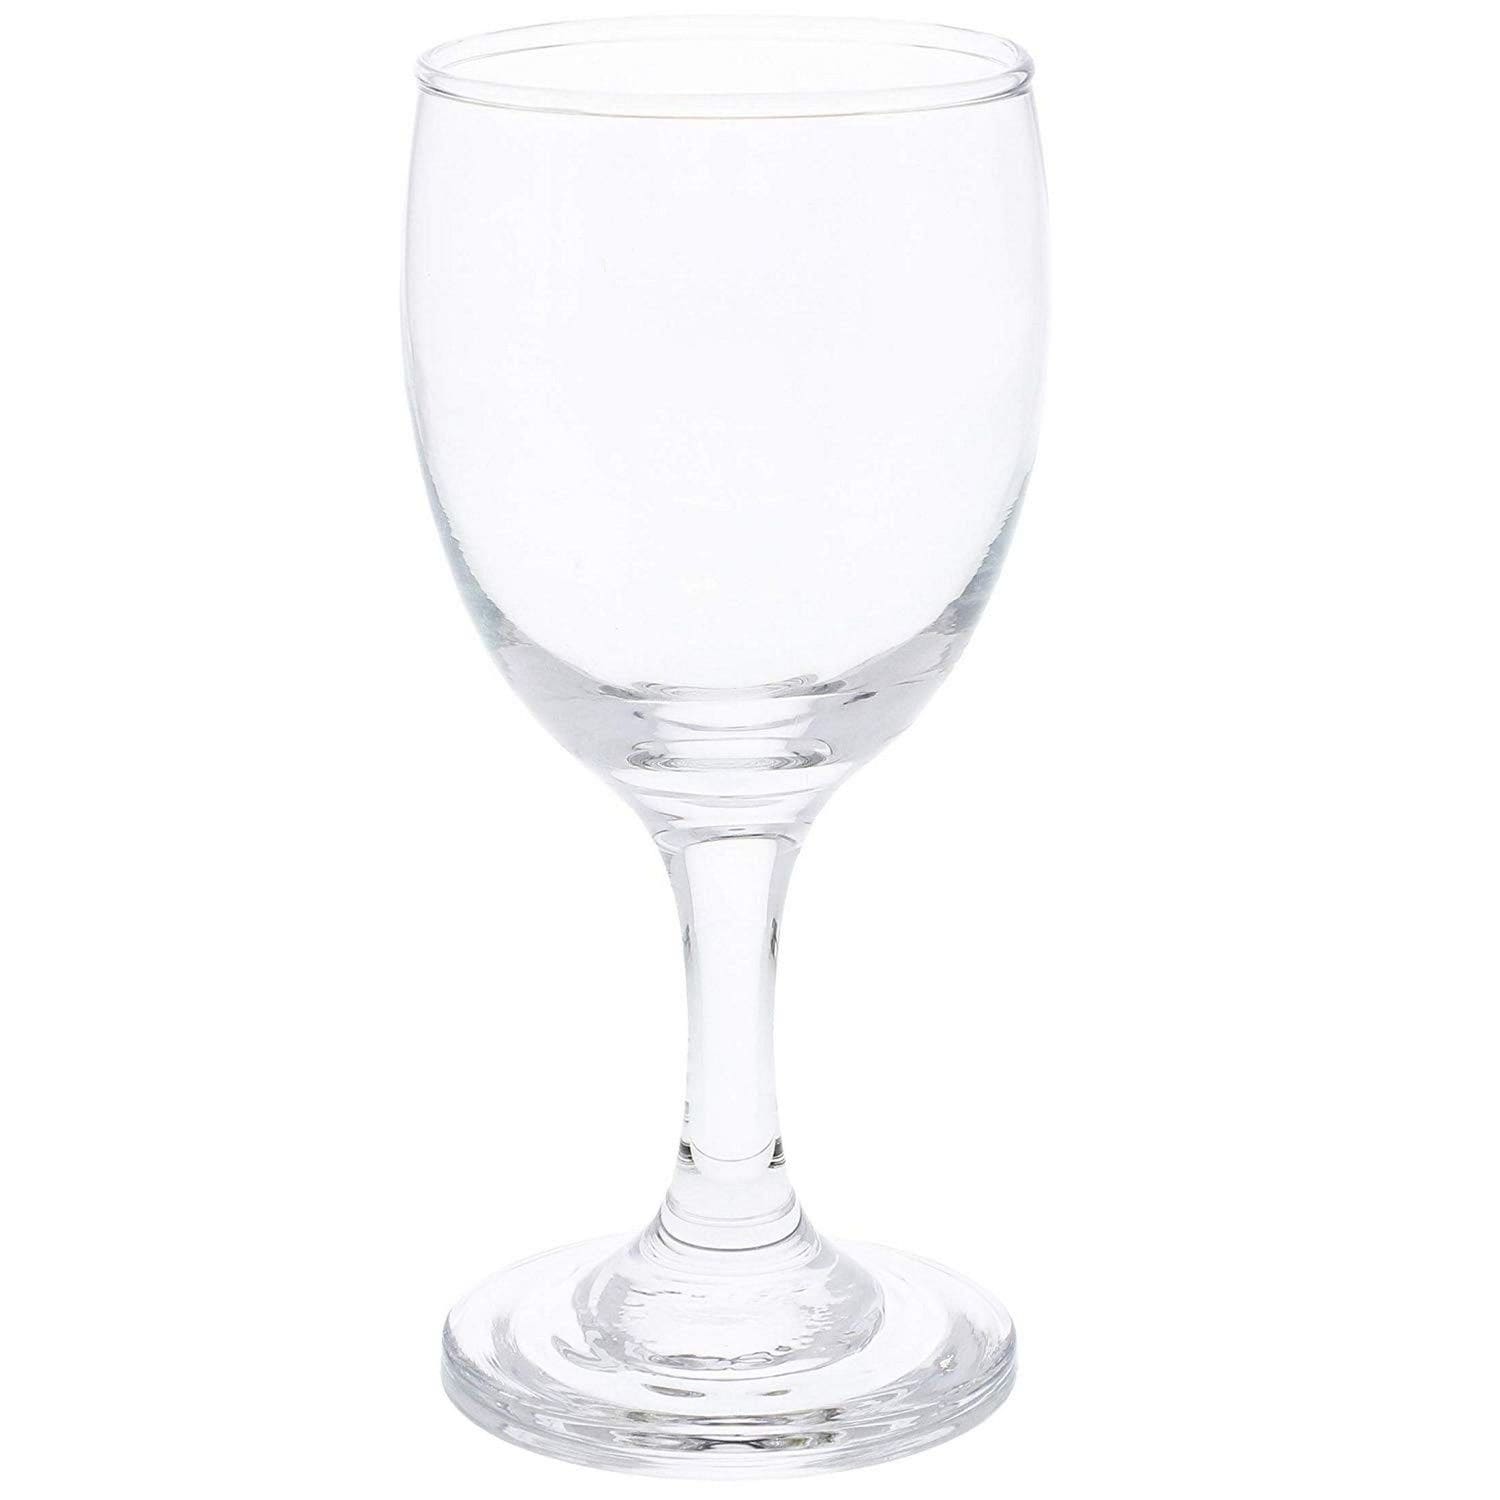 https://ak1.ostkcdn.com/images/products/30100835/Juvale-Set-of-4-Small-Clear-Glass-Stemmed-Wine-Glasses-4.5-Ounces-6b9805ce-847f-445f-b907-f34d3c87cb8b.jpg